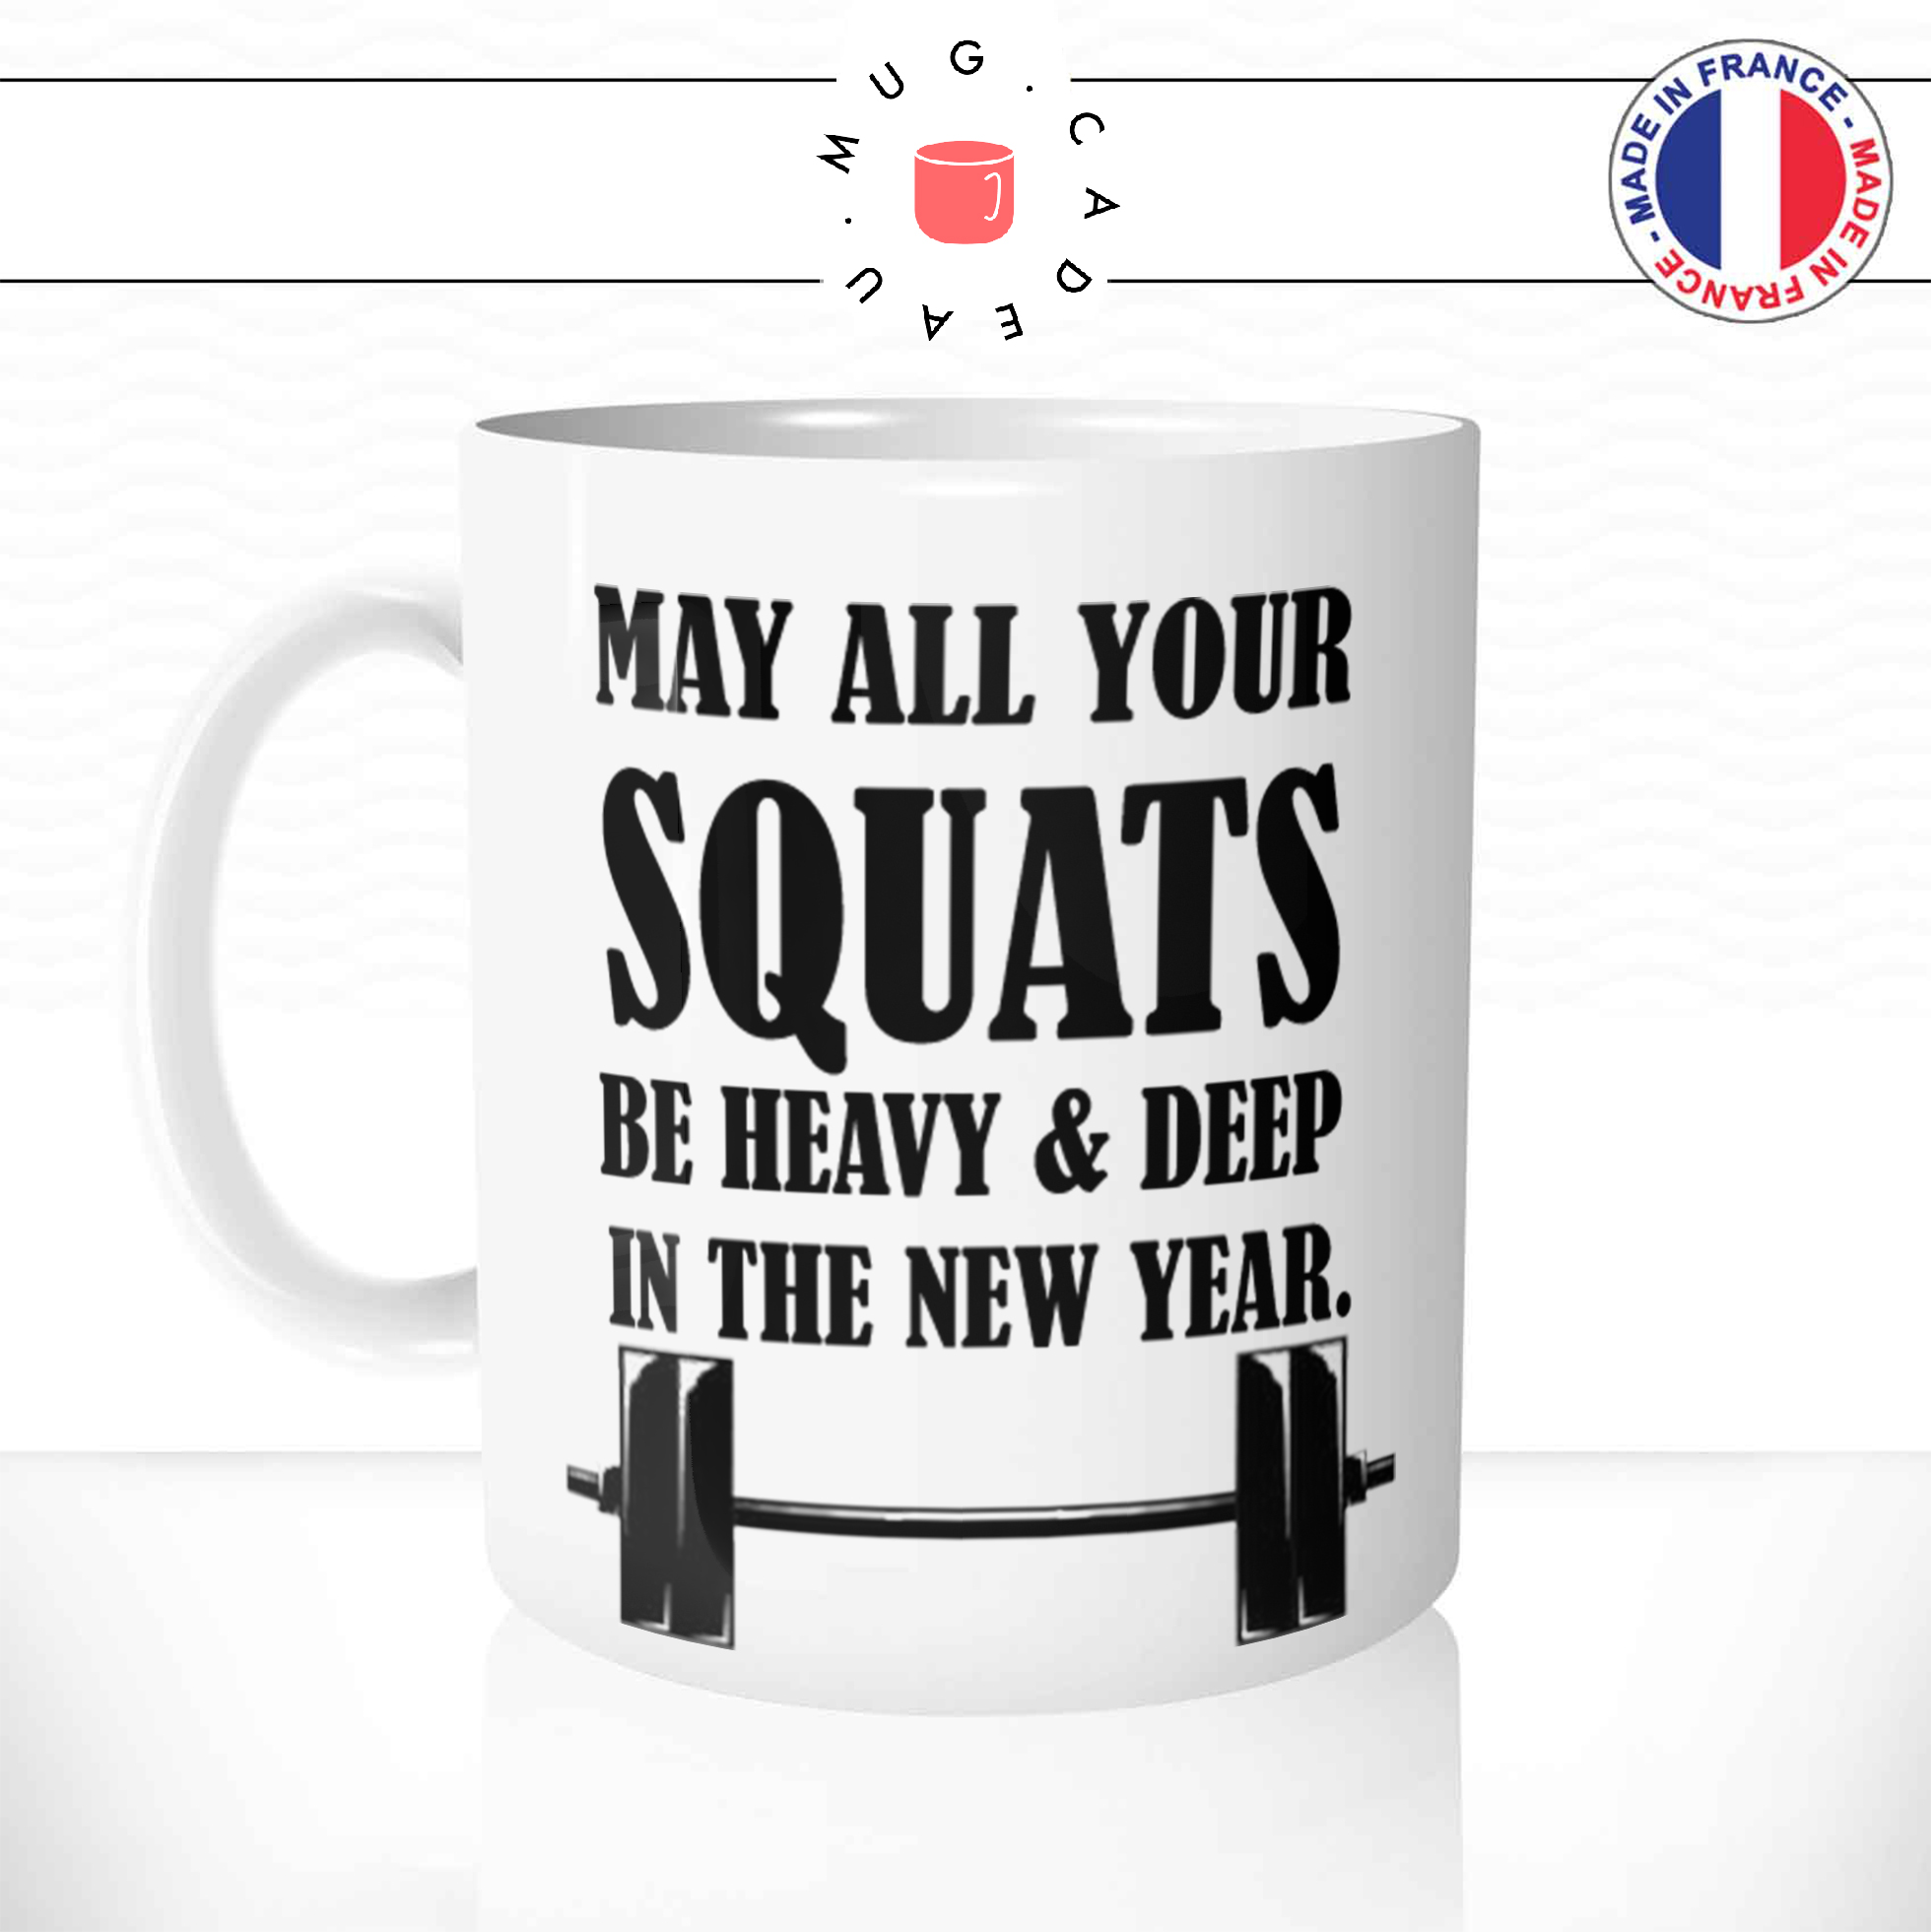 mug-tasse-ref76-citation-motivation-squat-barbell-heavy-deep-cafe-the-mugs-tasses-personnalise-anse-gauche